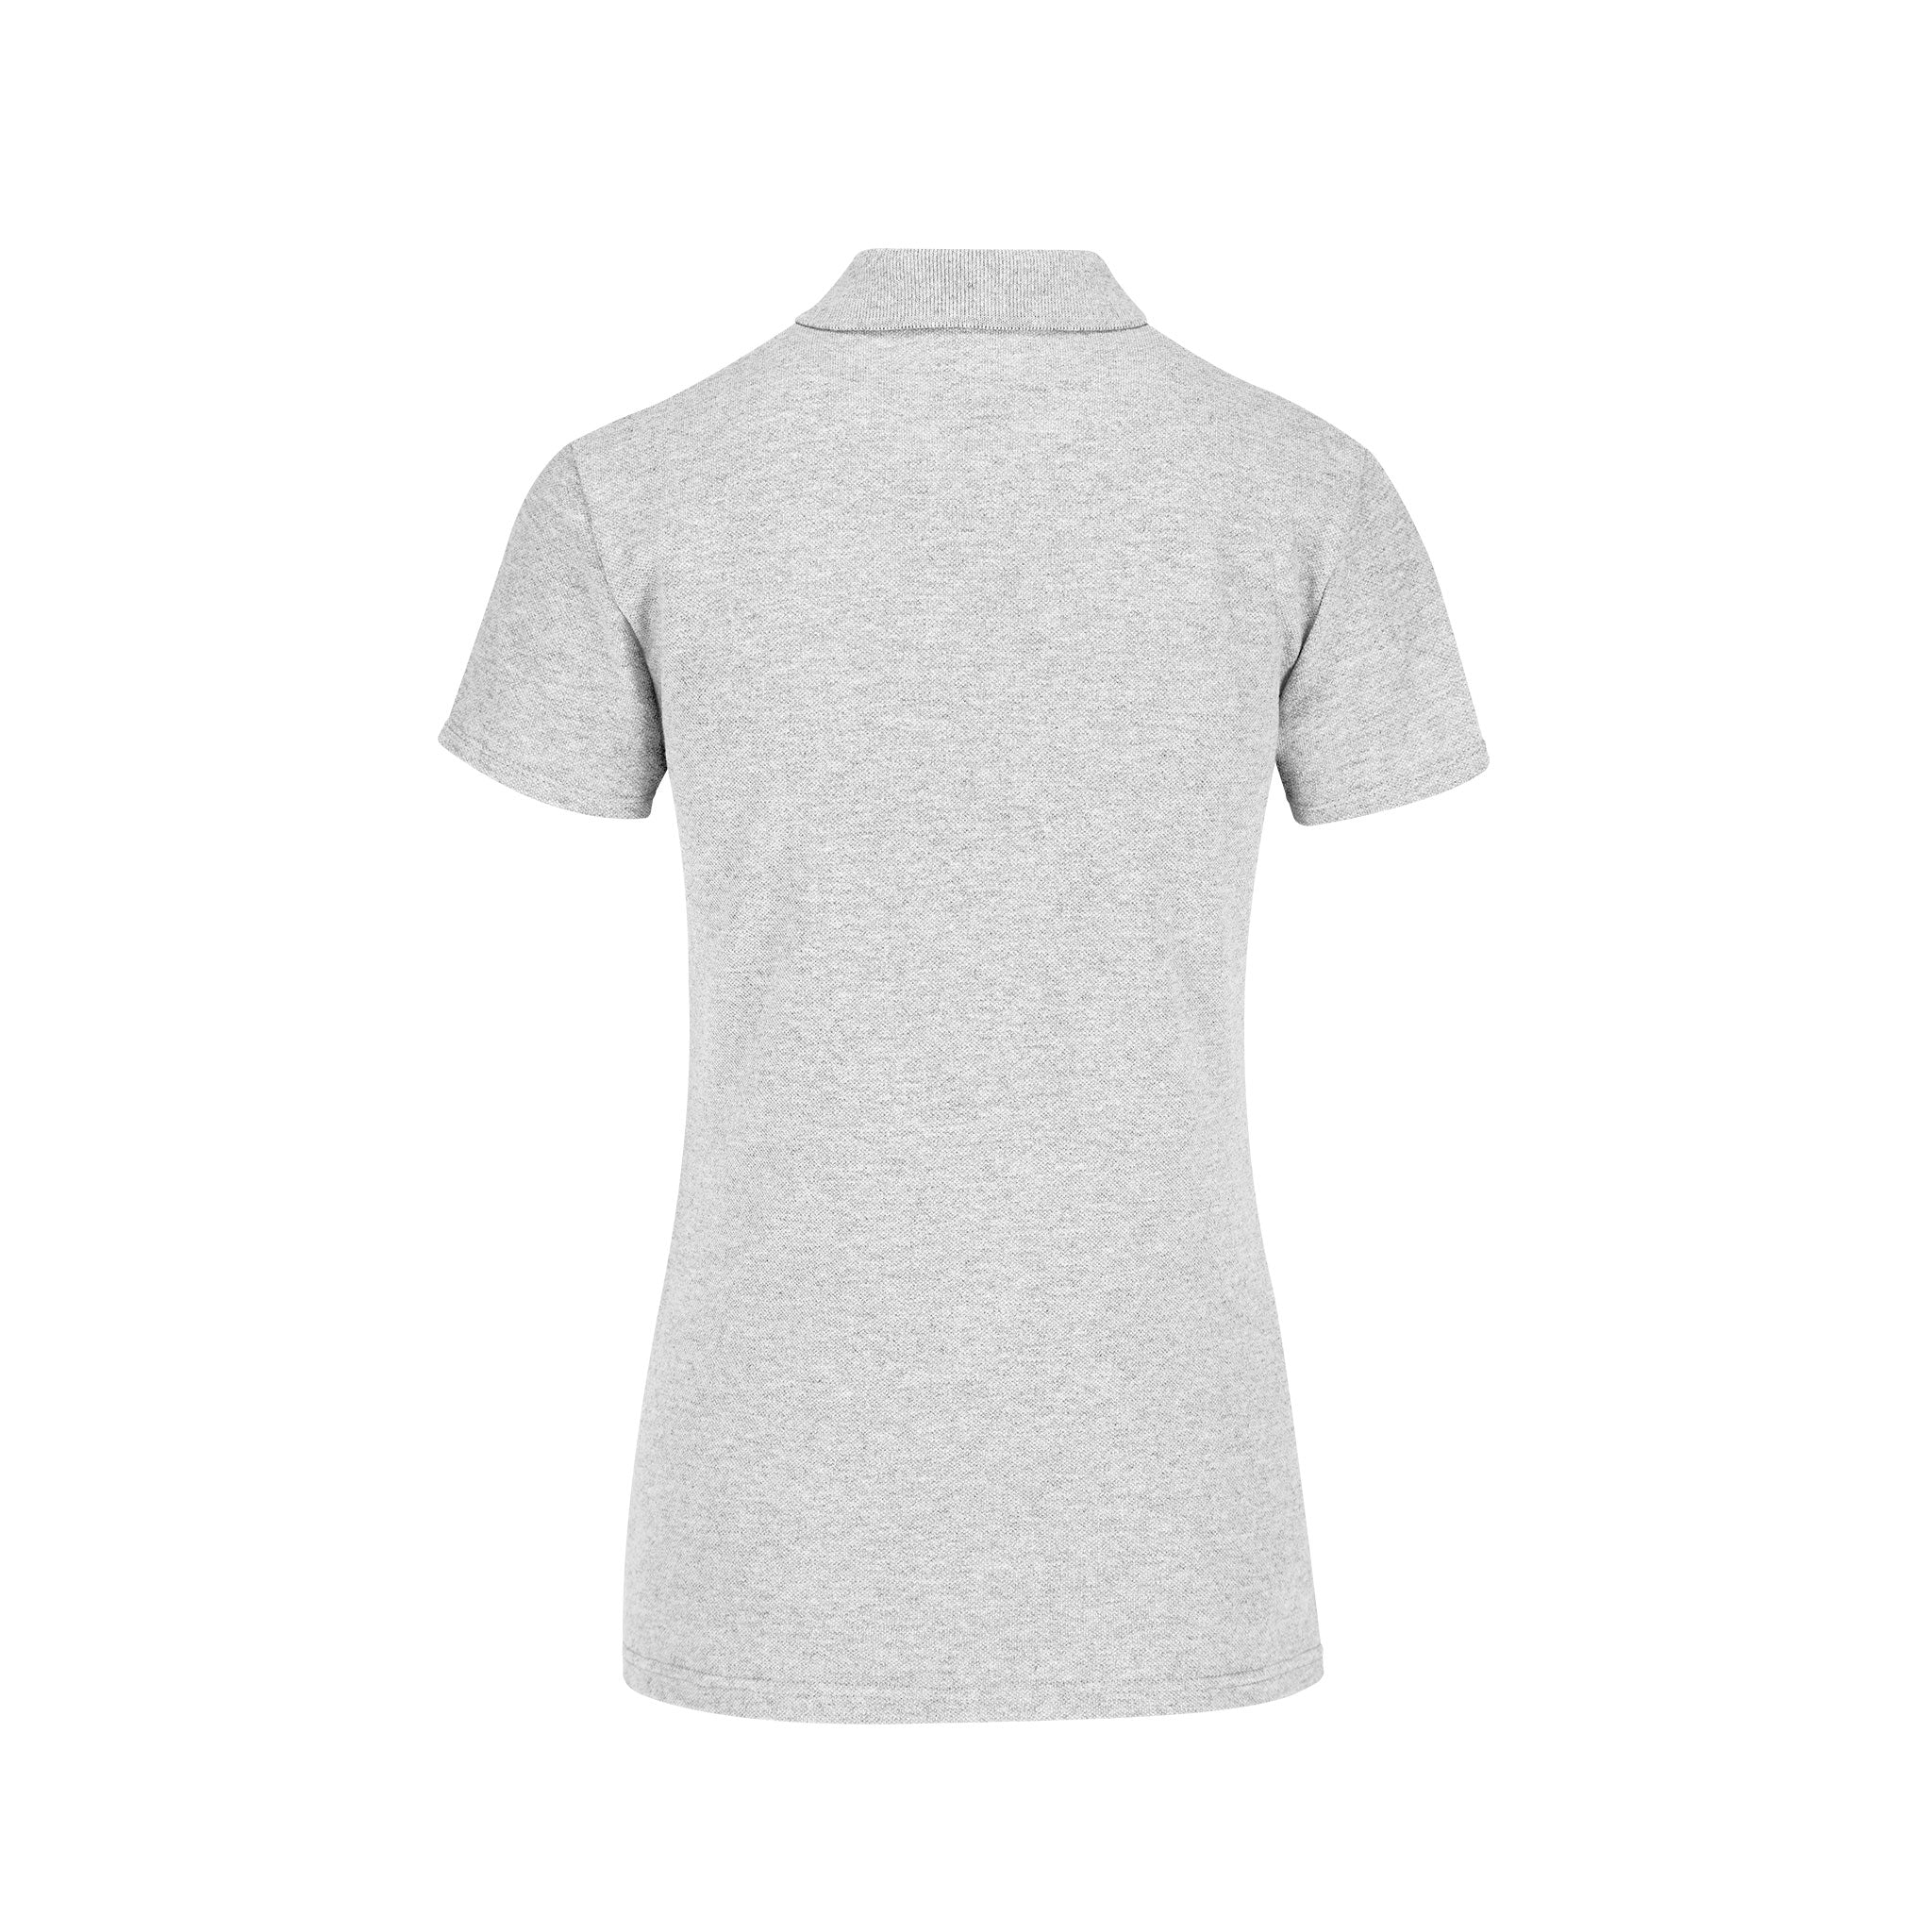 Yazbek Women’s Crew Neck Long Sleeve Silhouette T-Shirt (Heather Grey) XL / Texas